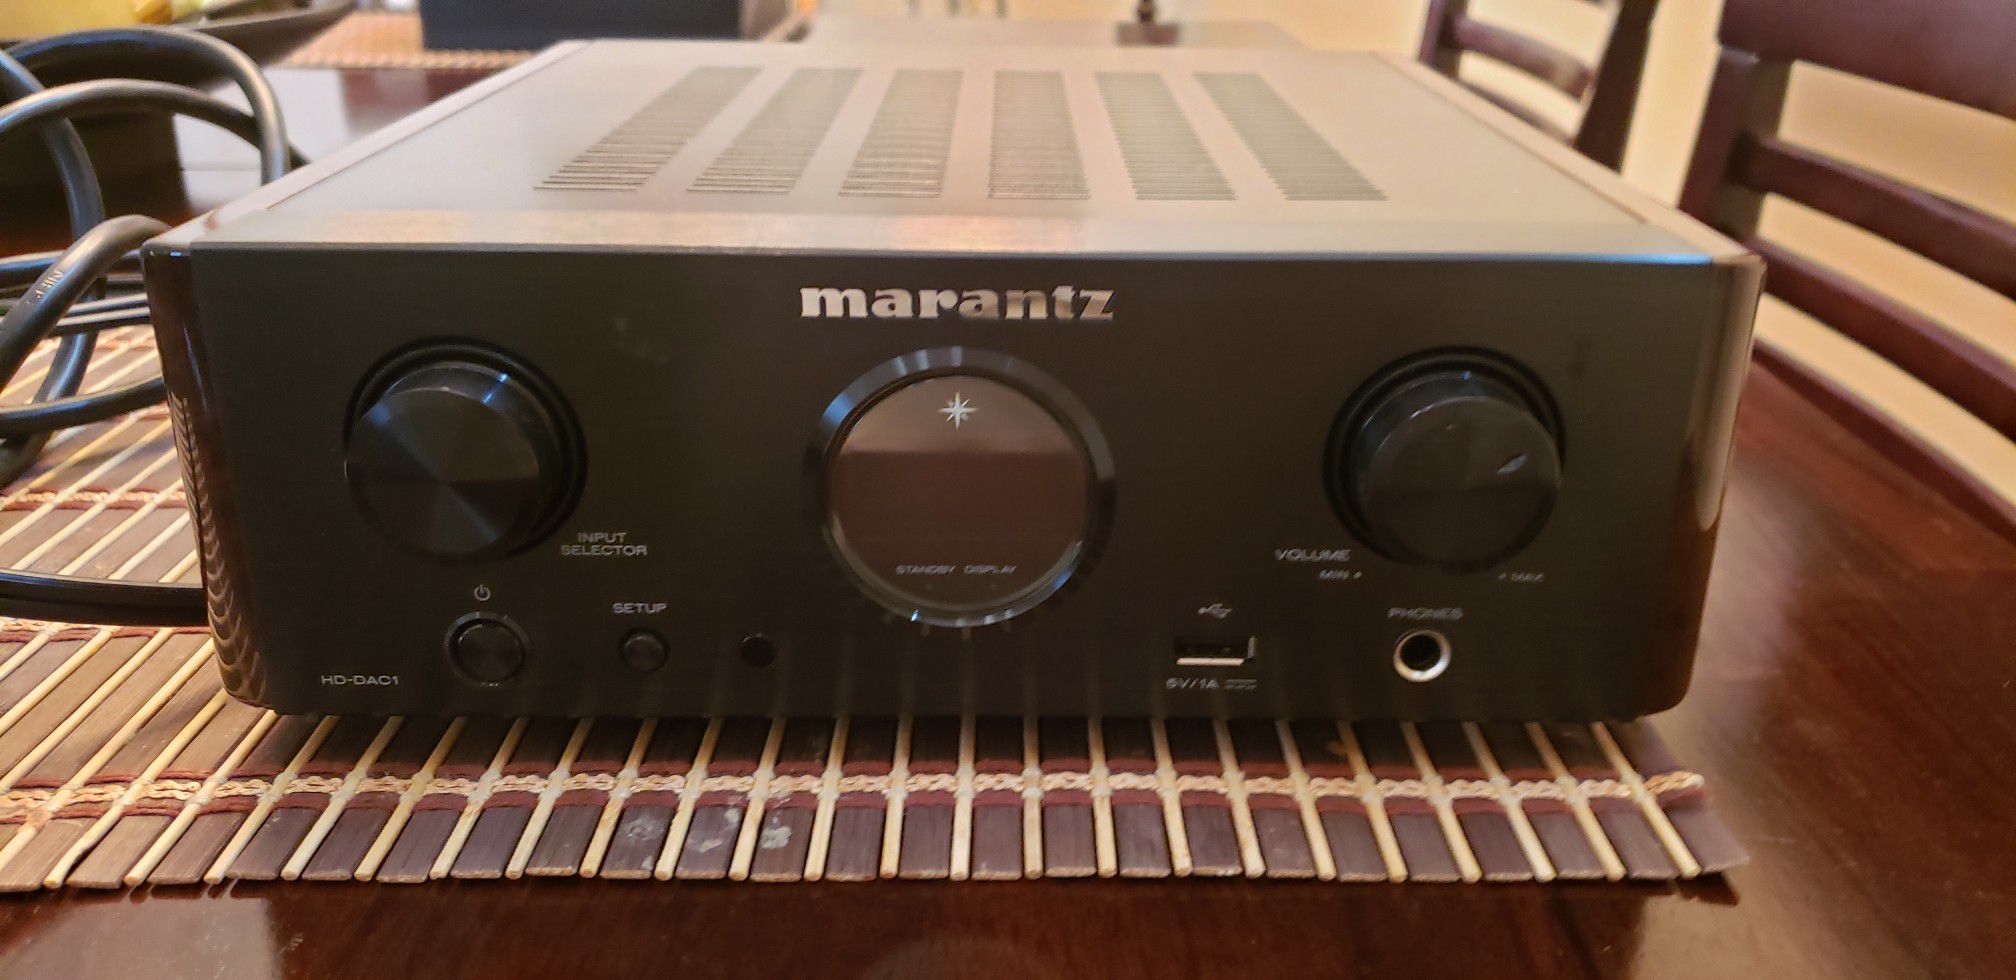 Marantz HD Dac1 Headphone Amp/Dac